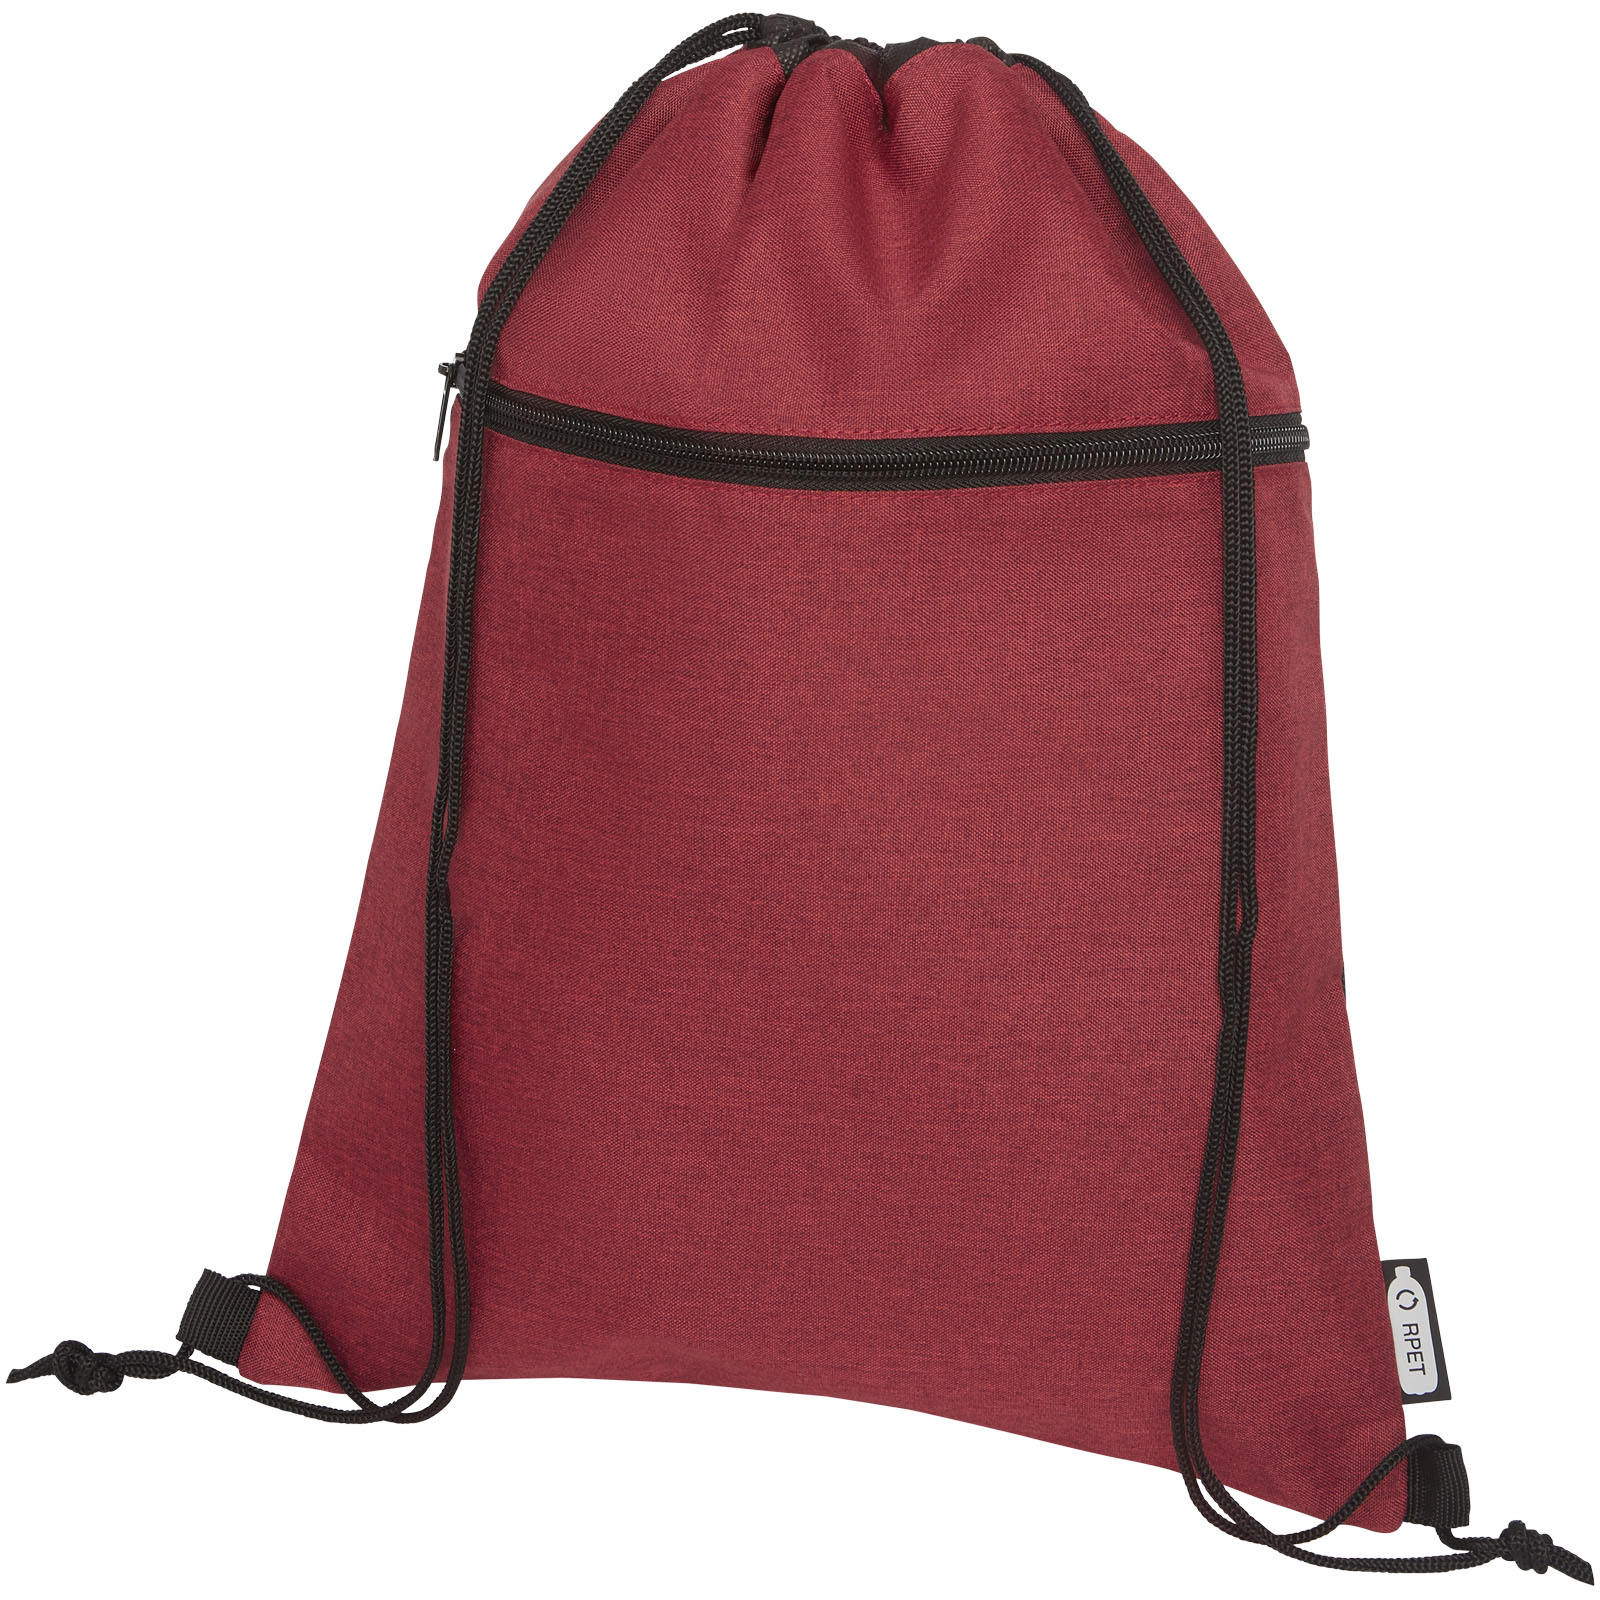 Drawstring Bags - Ross RPET drawstring backpack 5L